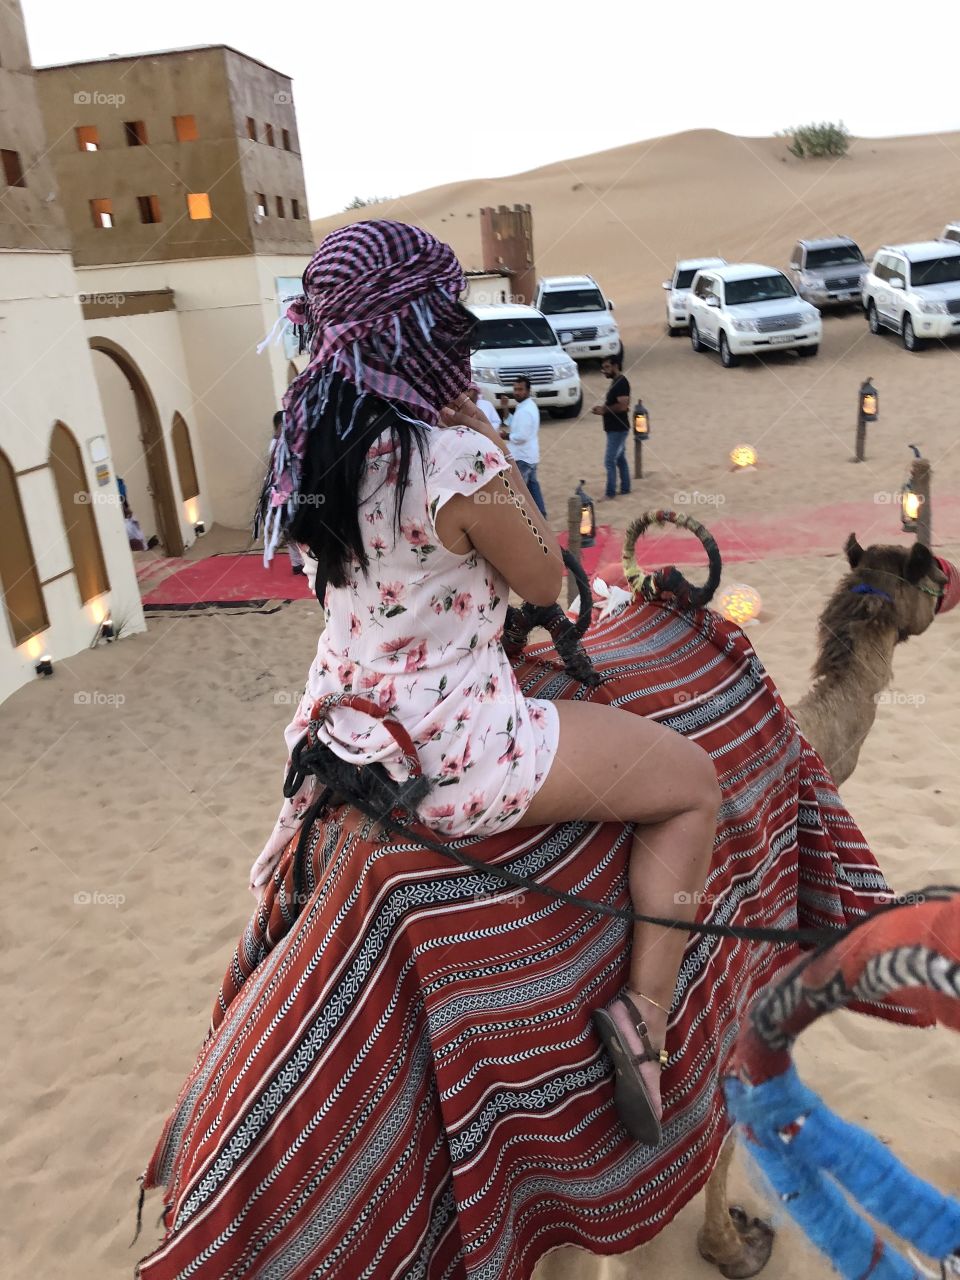 Camel power versus horse power. Dubai desert camel ride. Sand, heat, animals, pathfinder, cars 